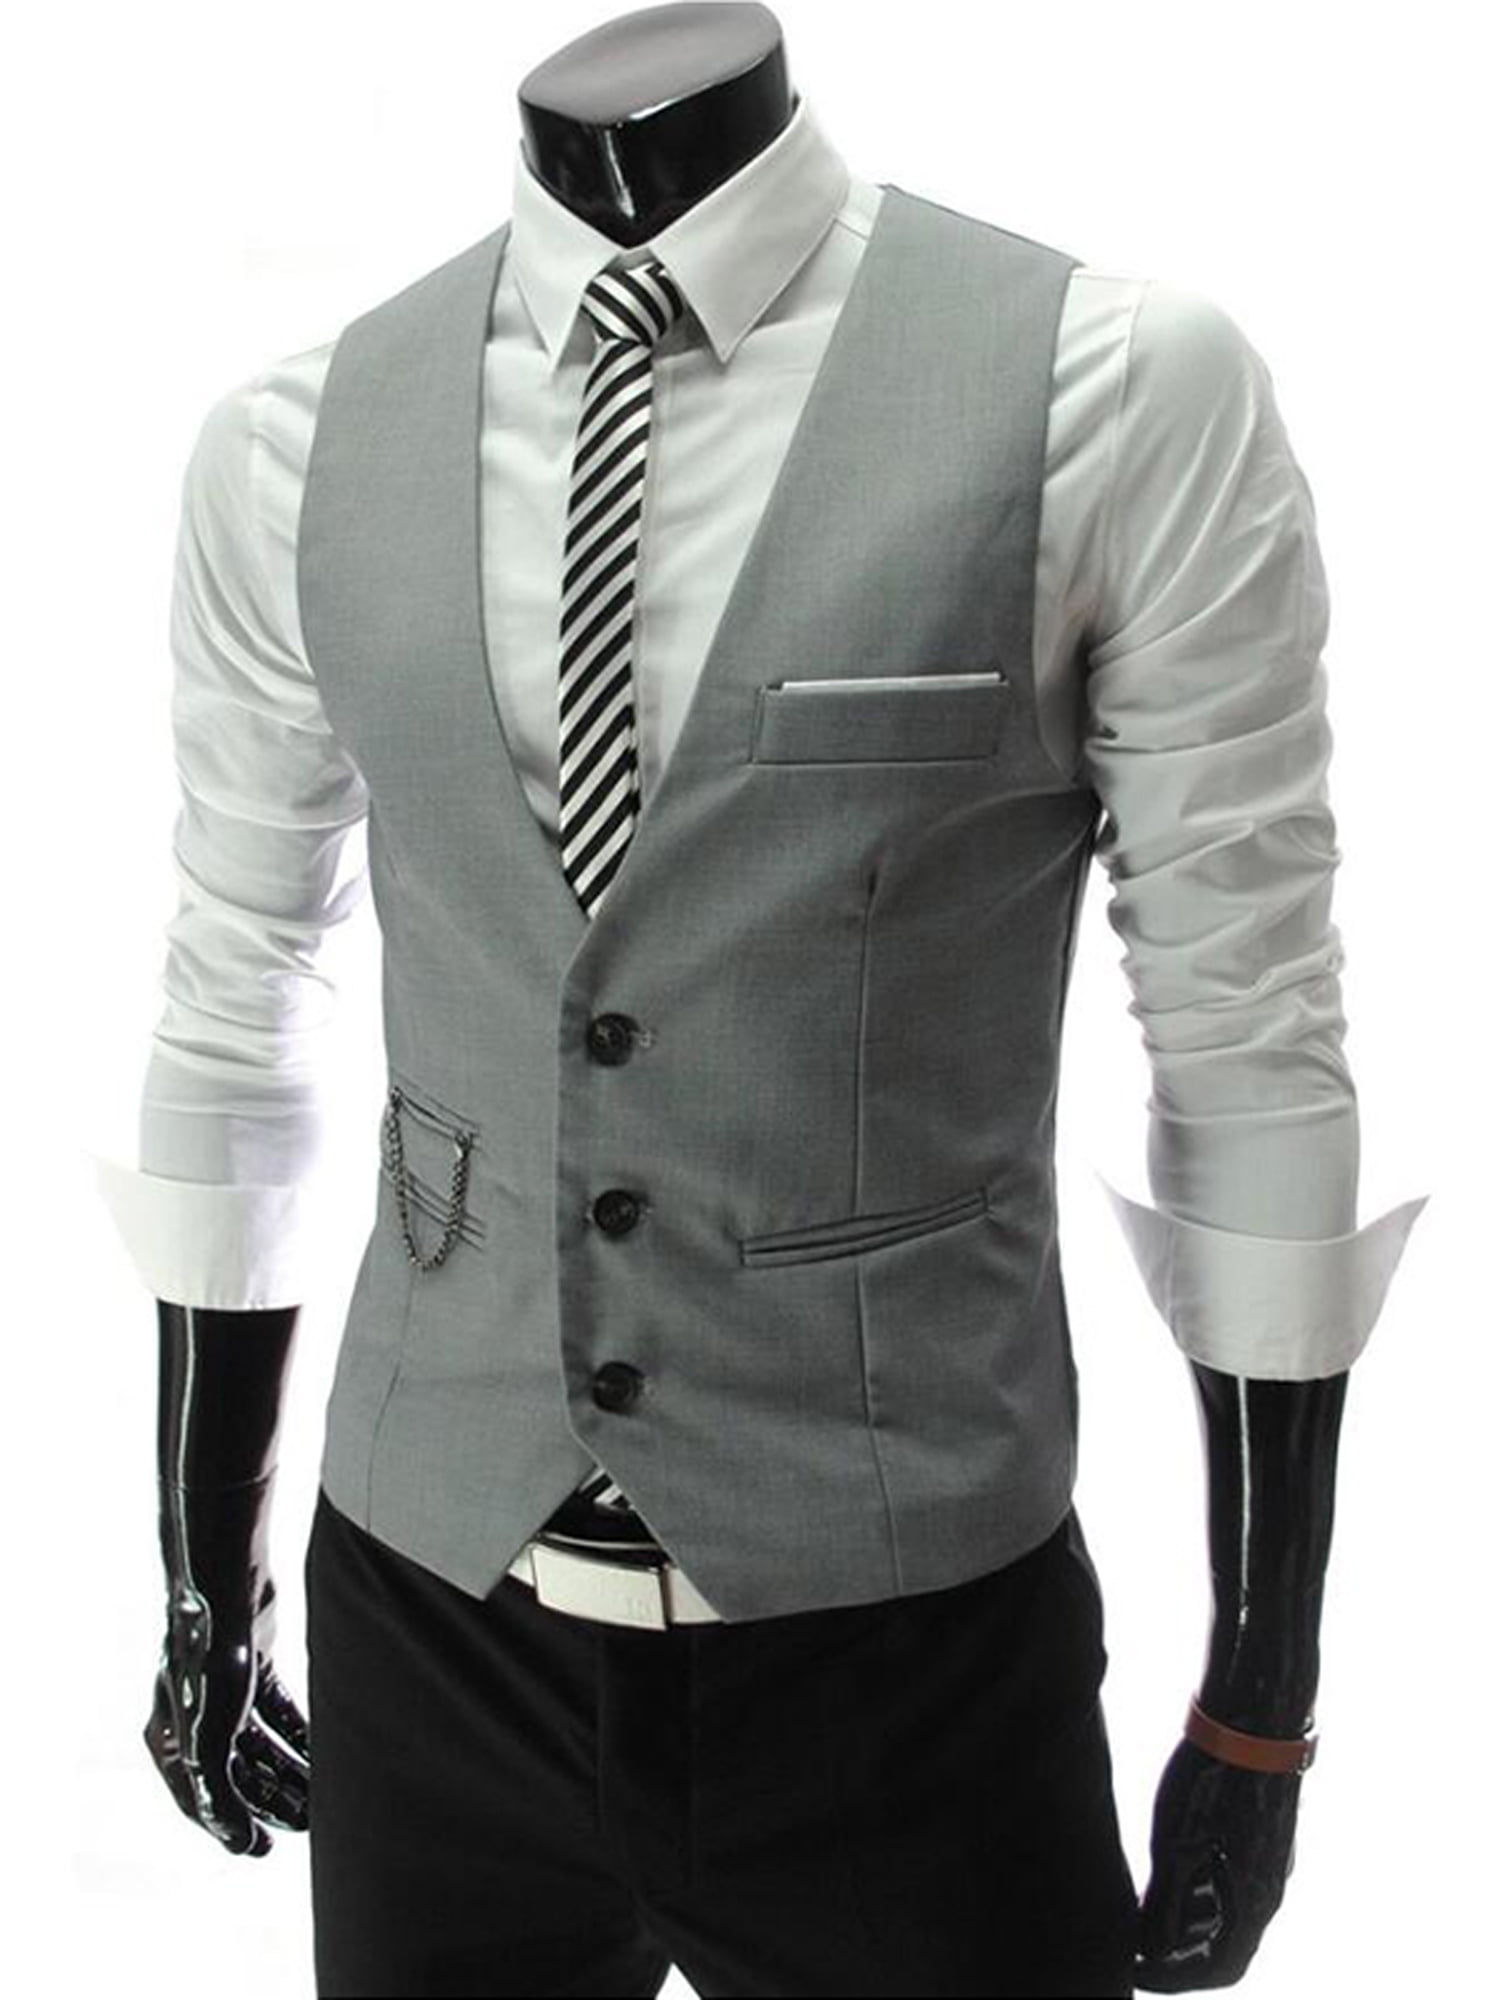 TOPGEE Mens Business Suit Vest V-Neck 5 Buttons Regular Fit Waistcoat